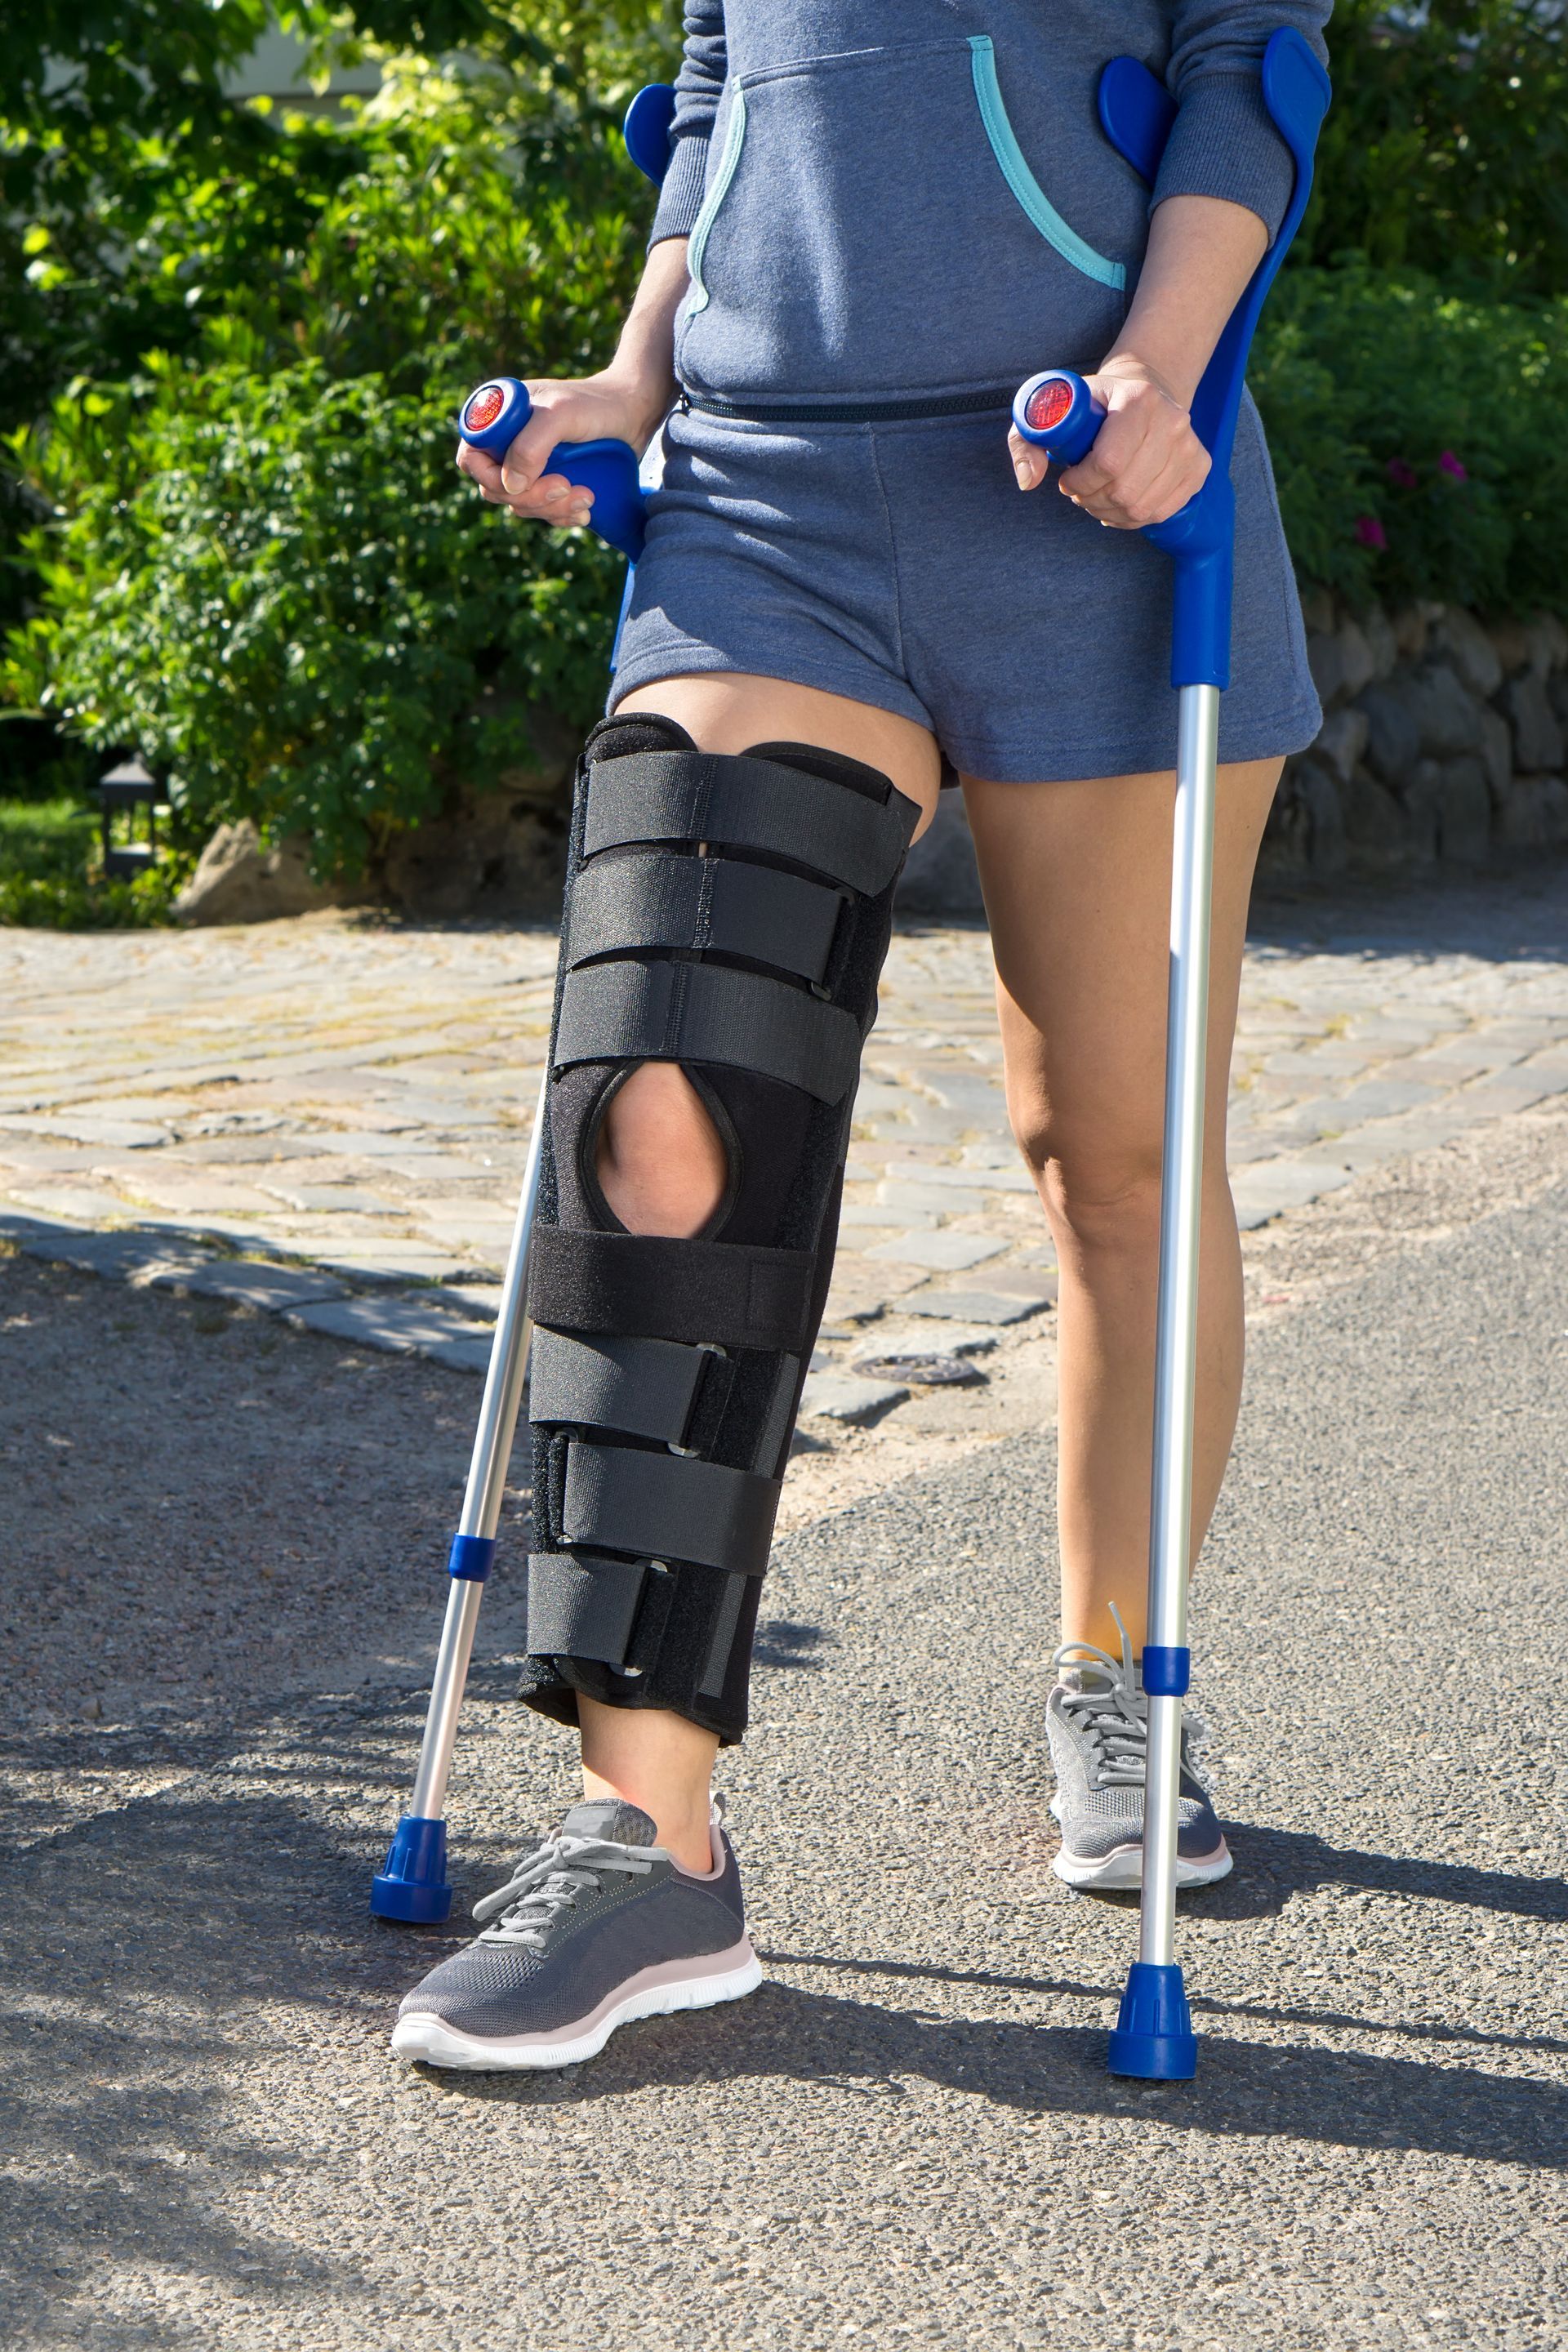 person holding crutches